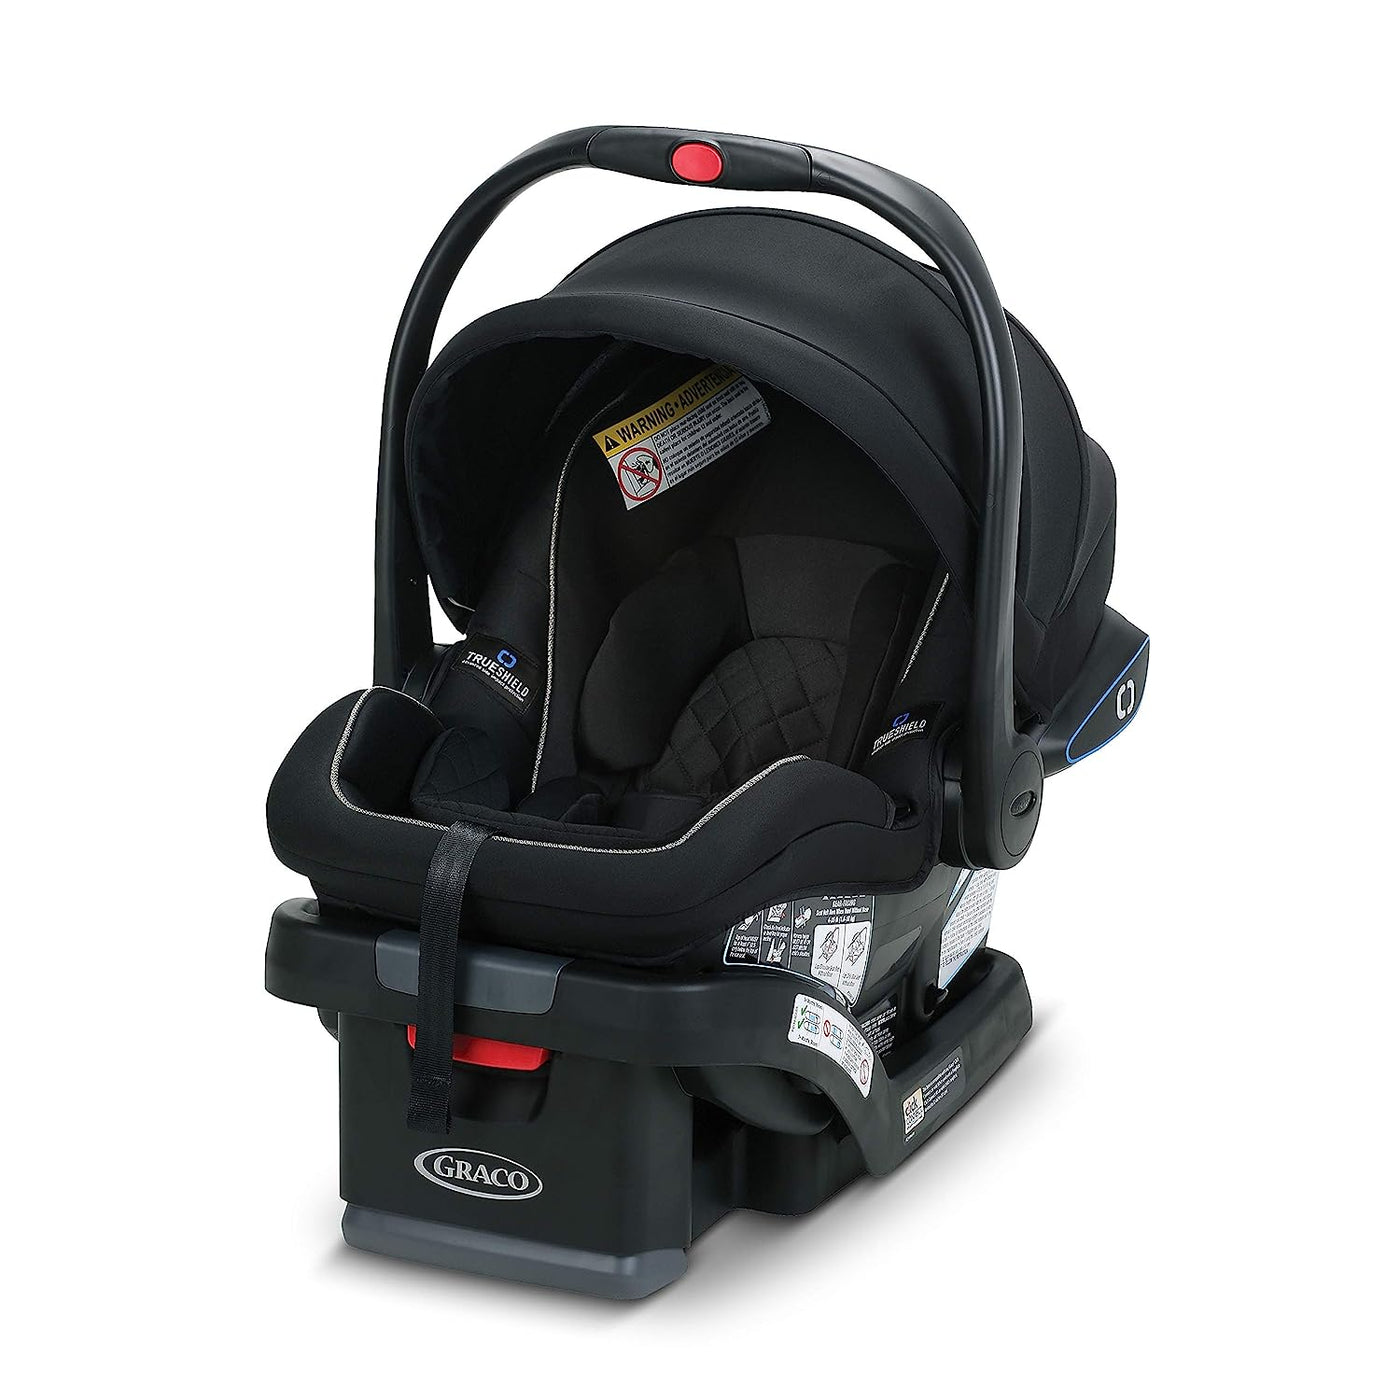 Graco SnugRide SnugLock 35 LX Infant Car Seat - $140